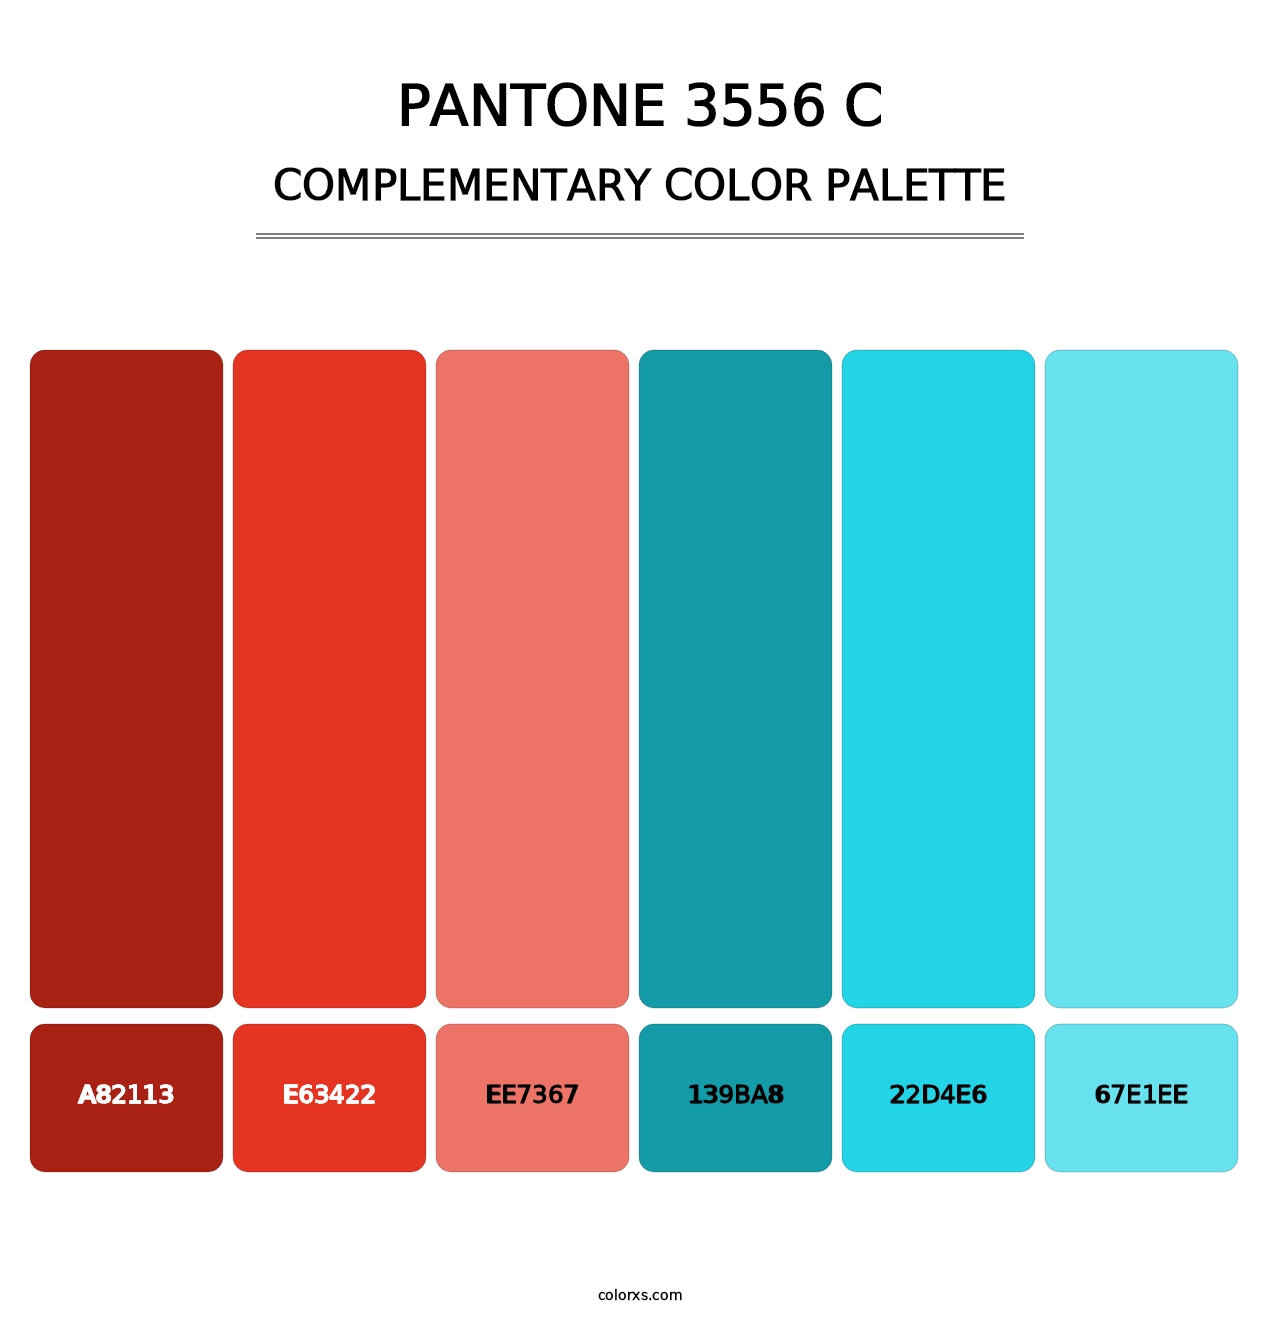 PANTONE 3556 C - Complementary Color Palette